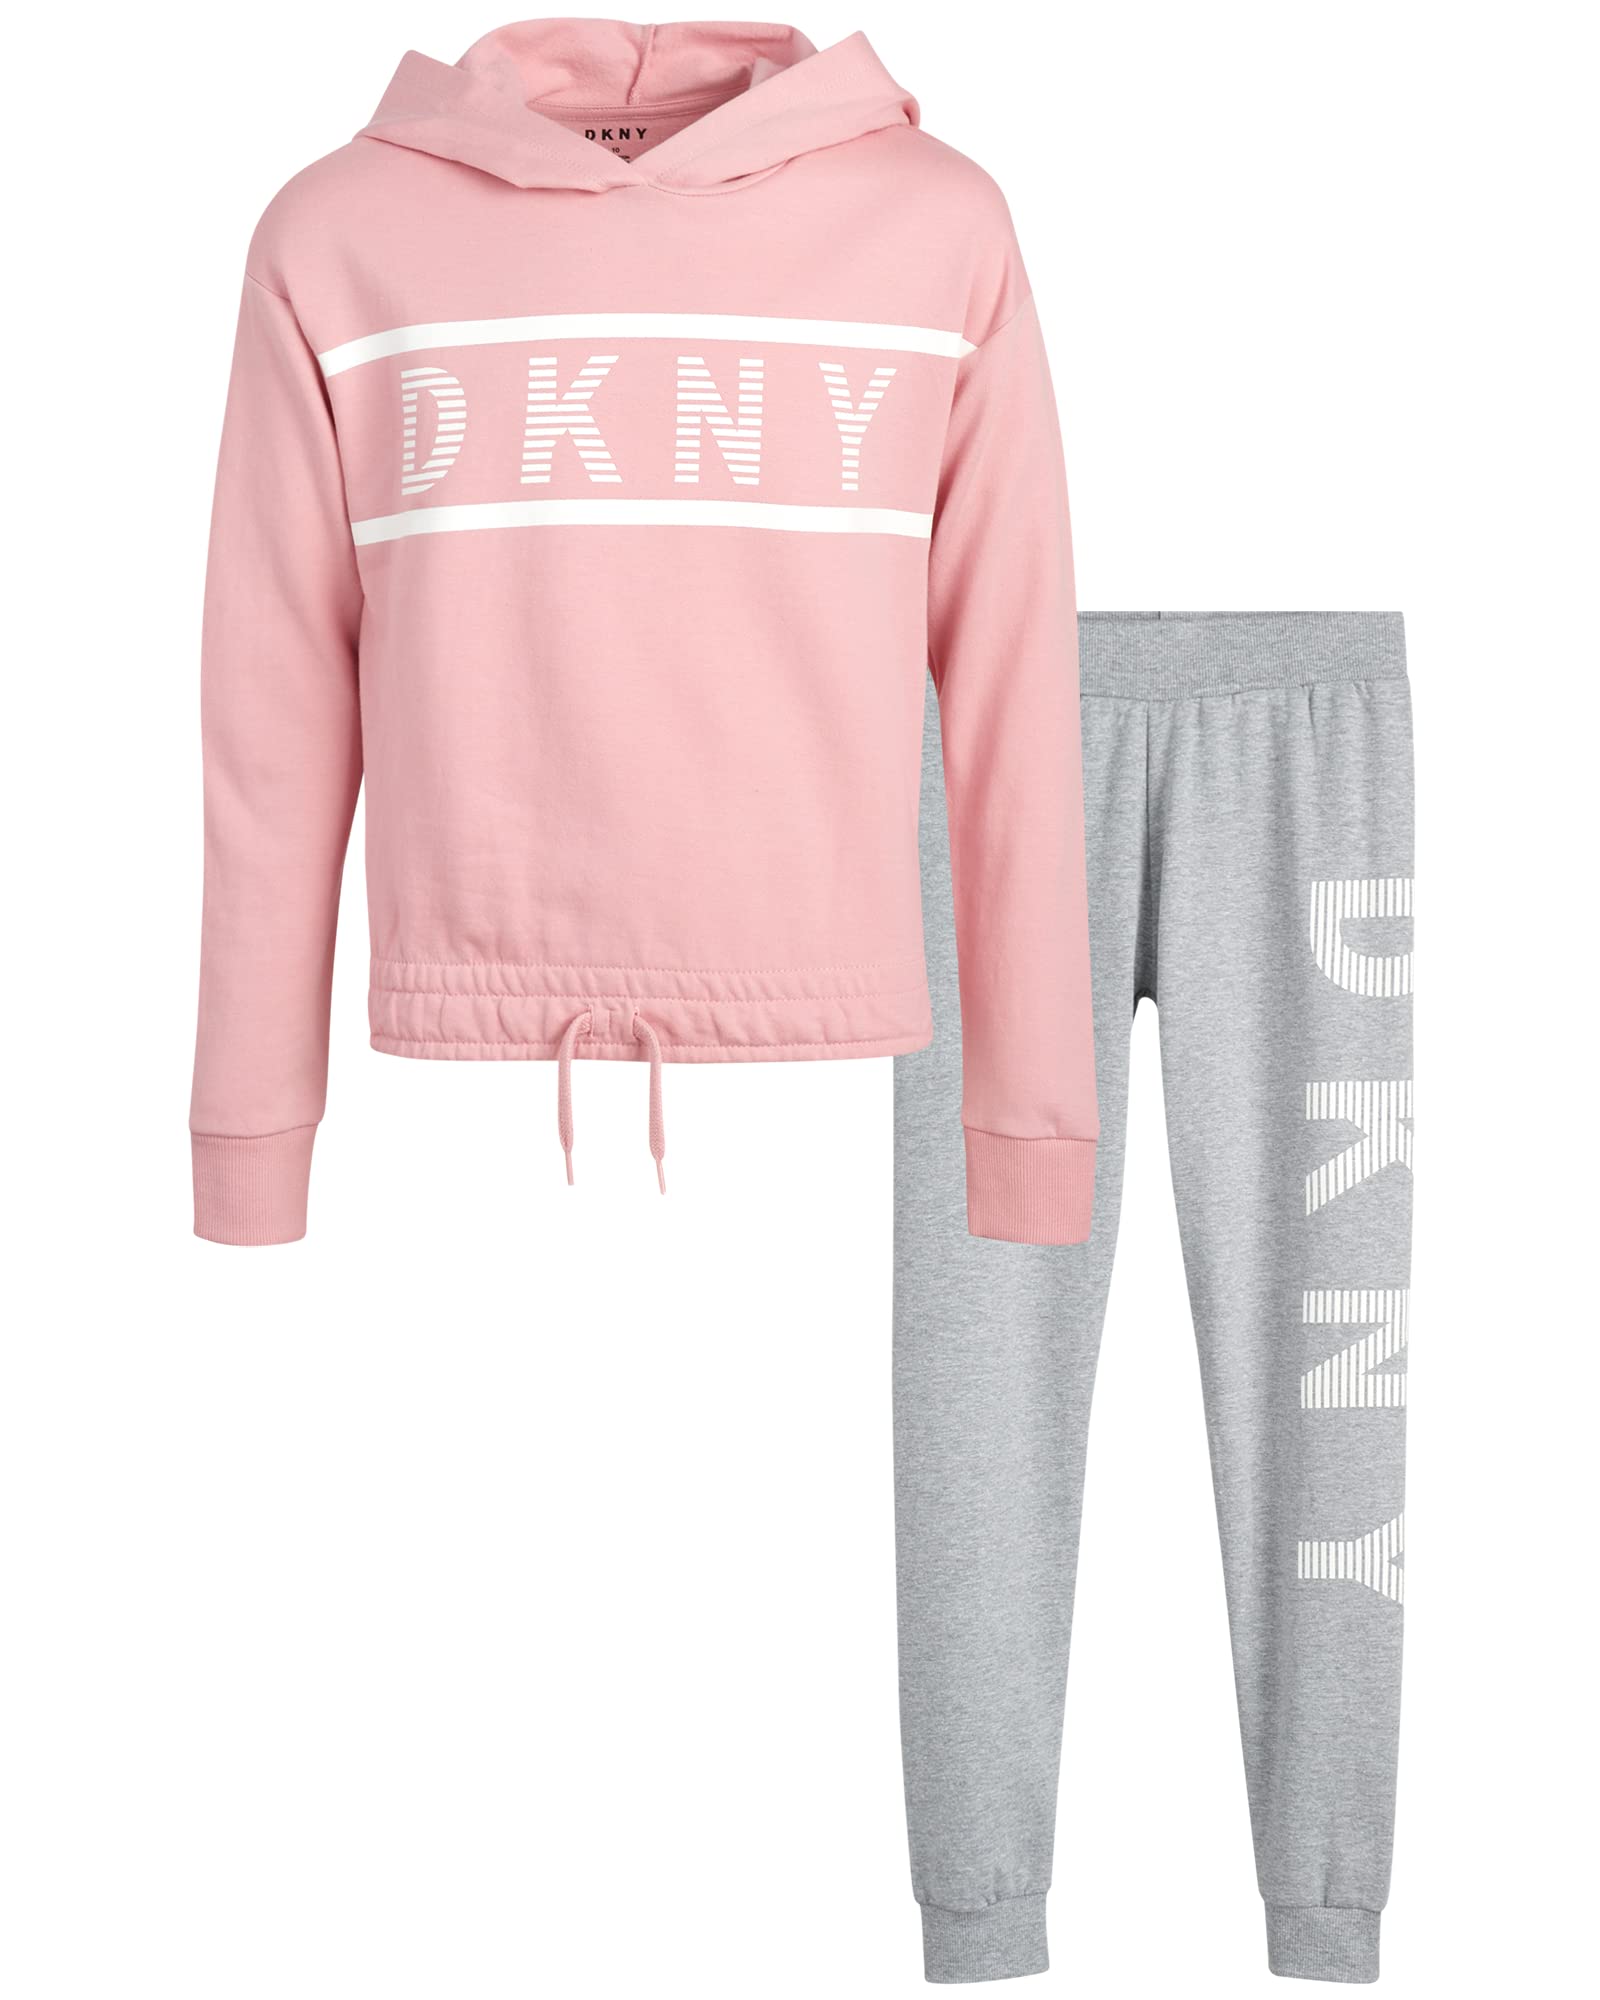 DKNY Girls’ Jogger Set – 2 Piece Hoodie and Sweatpants Kids Clothing Set (Size: 4-12)